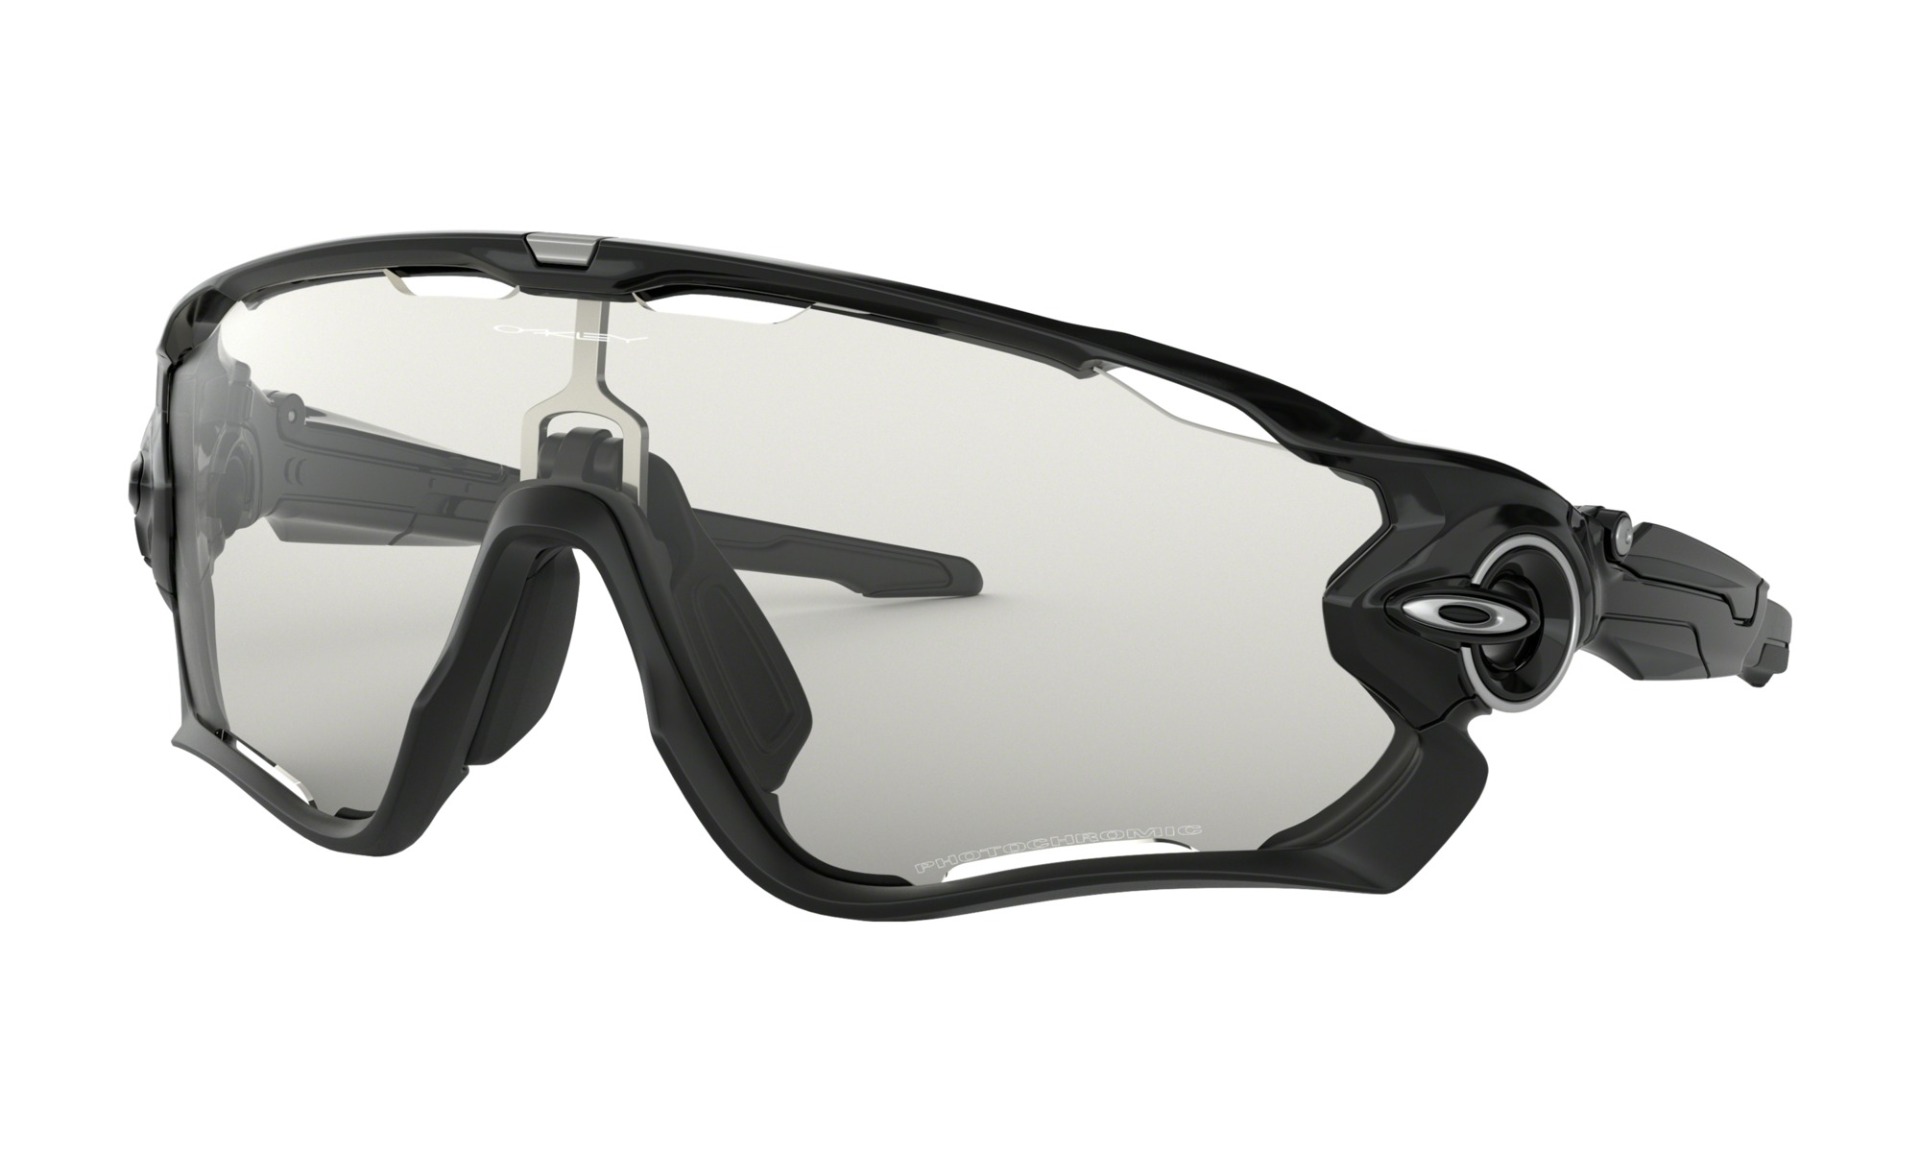 Oakley Clear Lens Glasses SportRx 